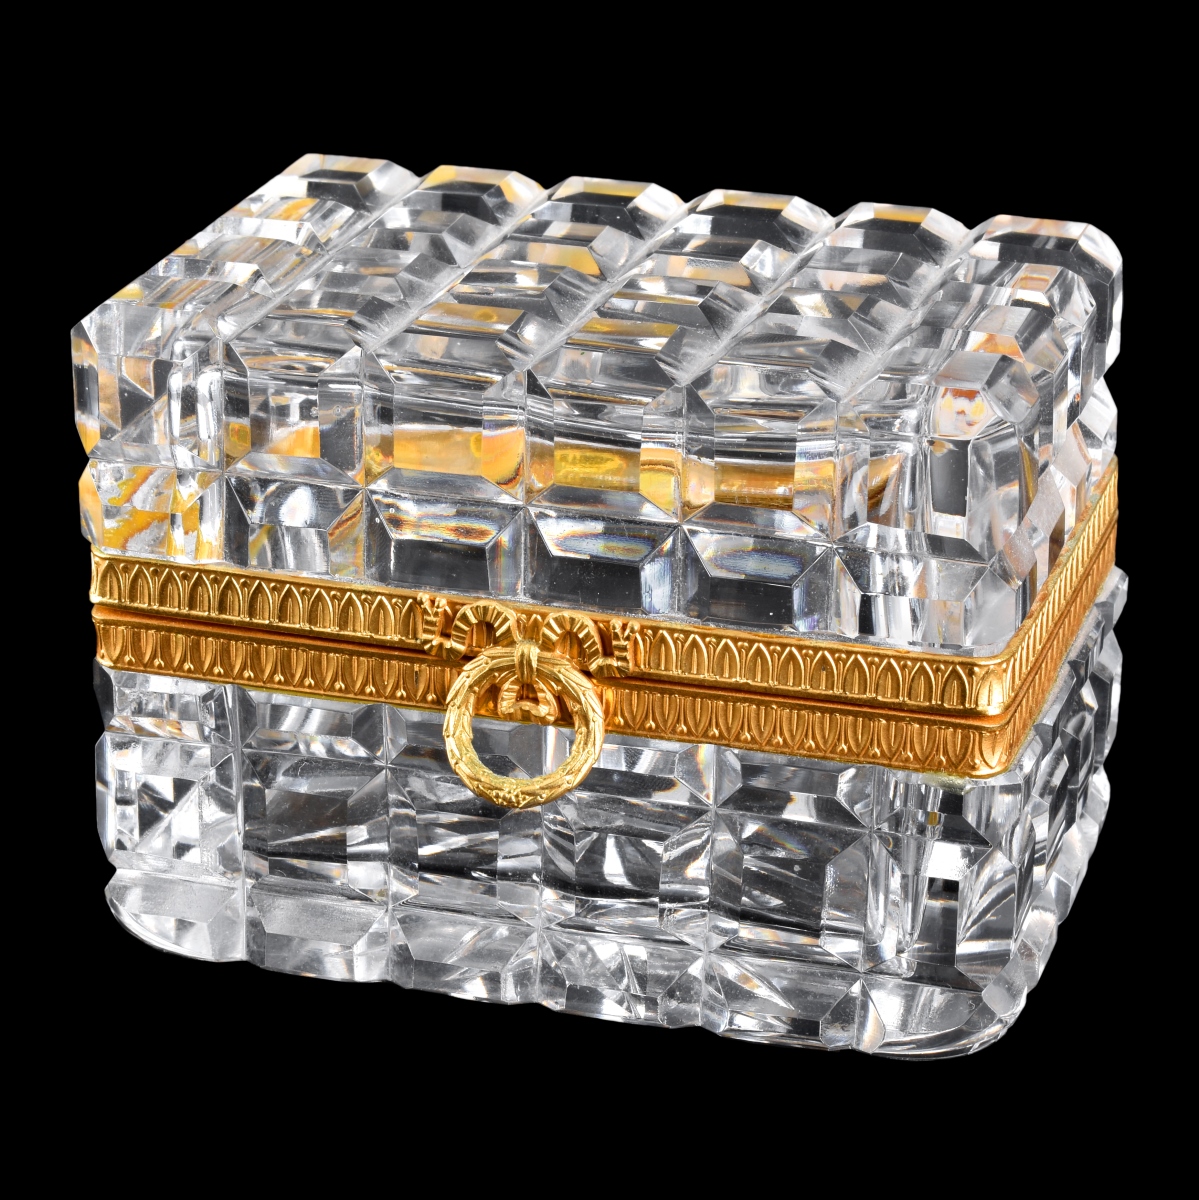 Vintage Baccarat Style Crystal Casket Box